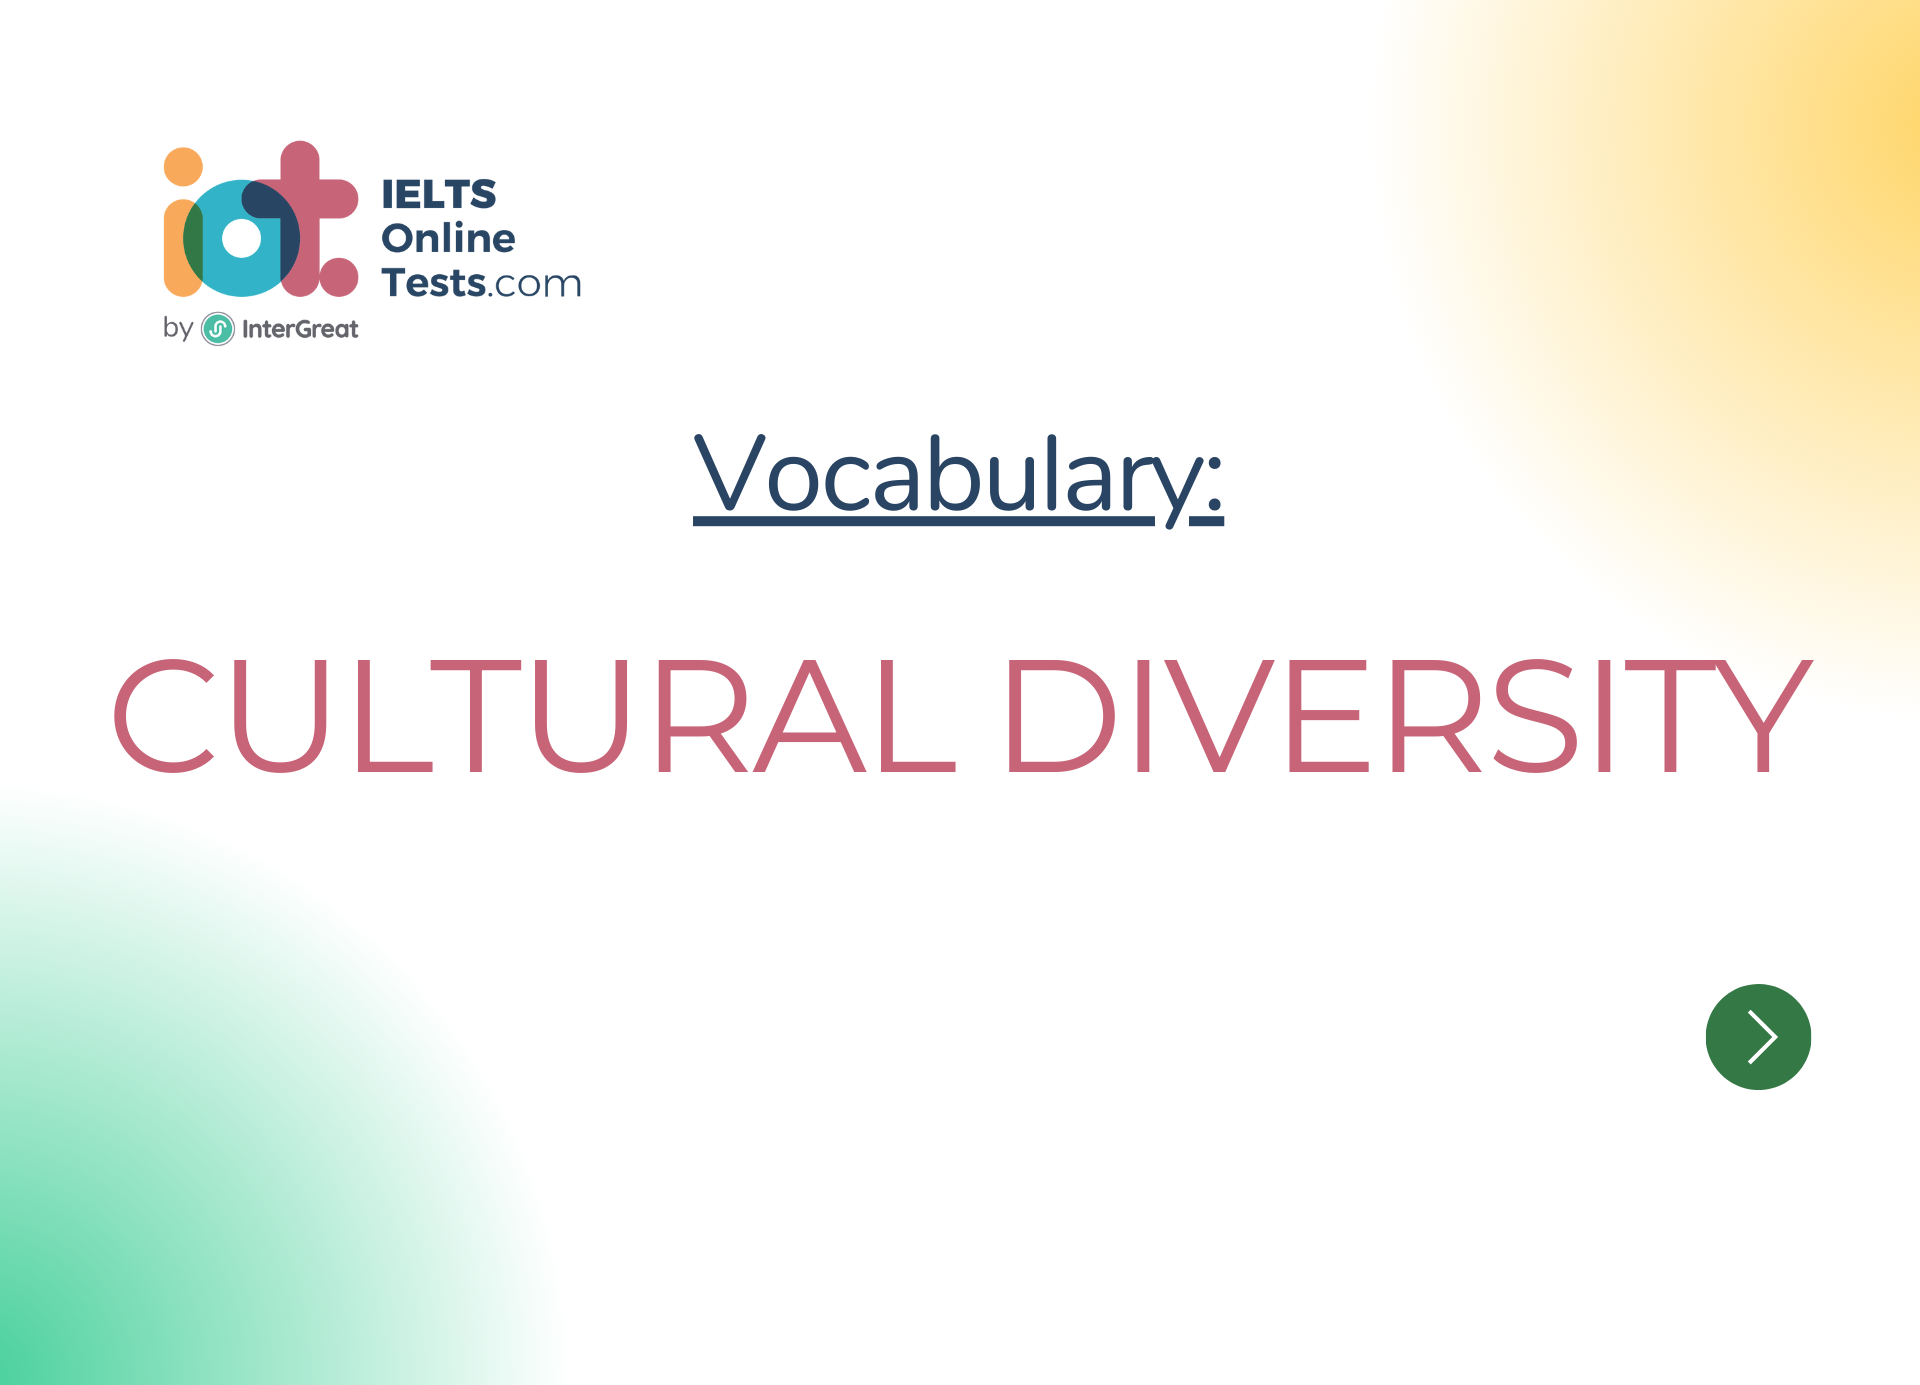 Cultural diversity | IELTS Online Tests